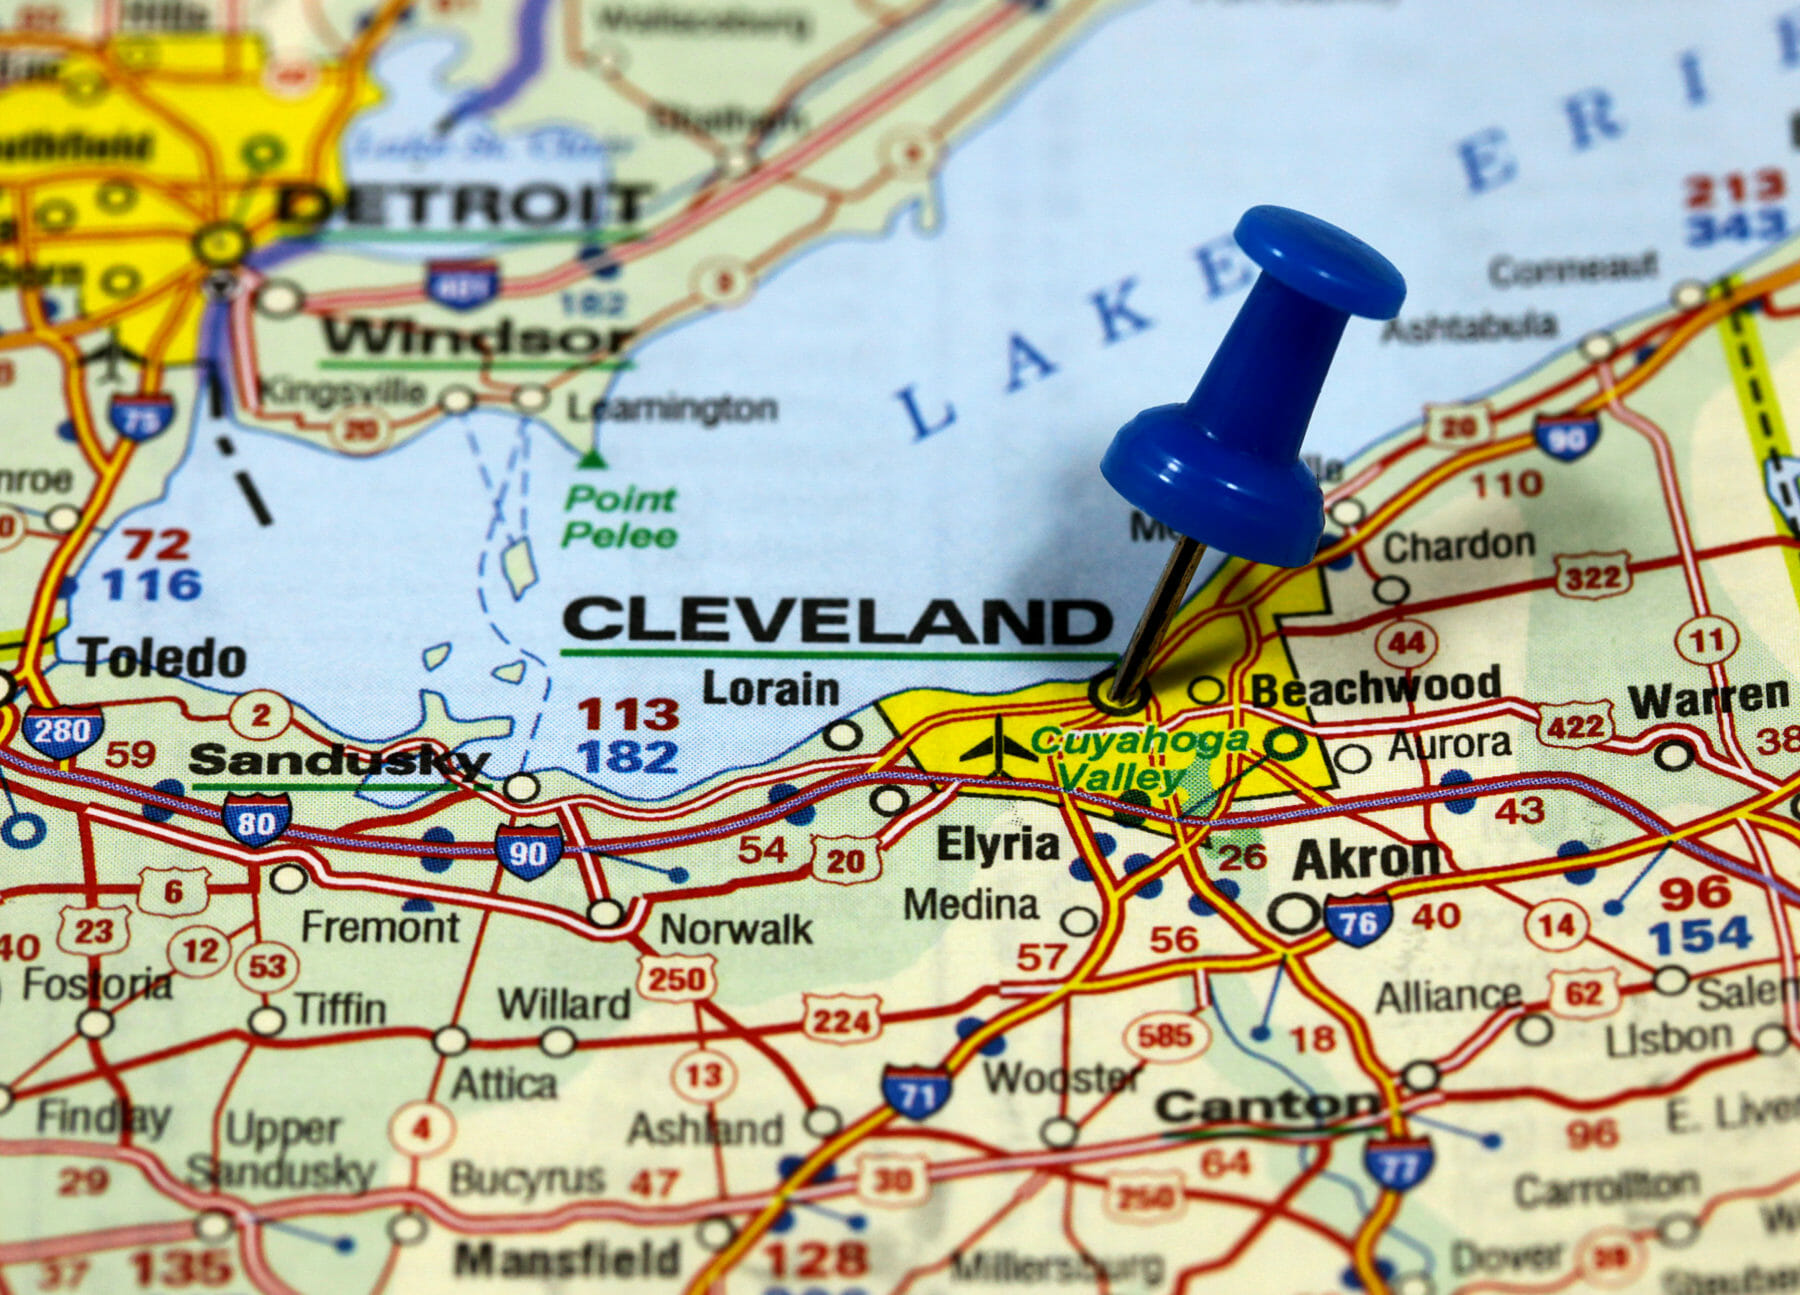 List of Companies Headquartered in Cleveland - Job Seekers Blog - JobStars USA